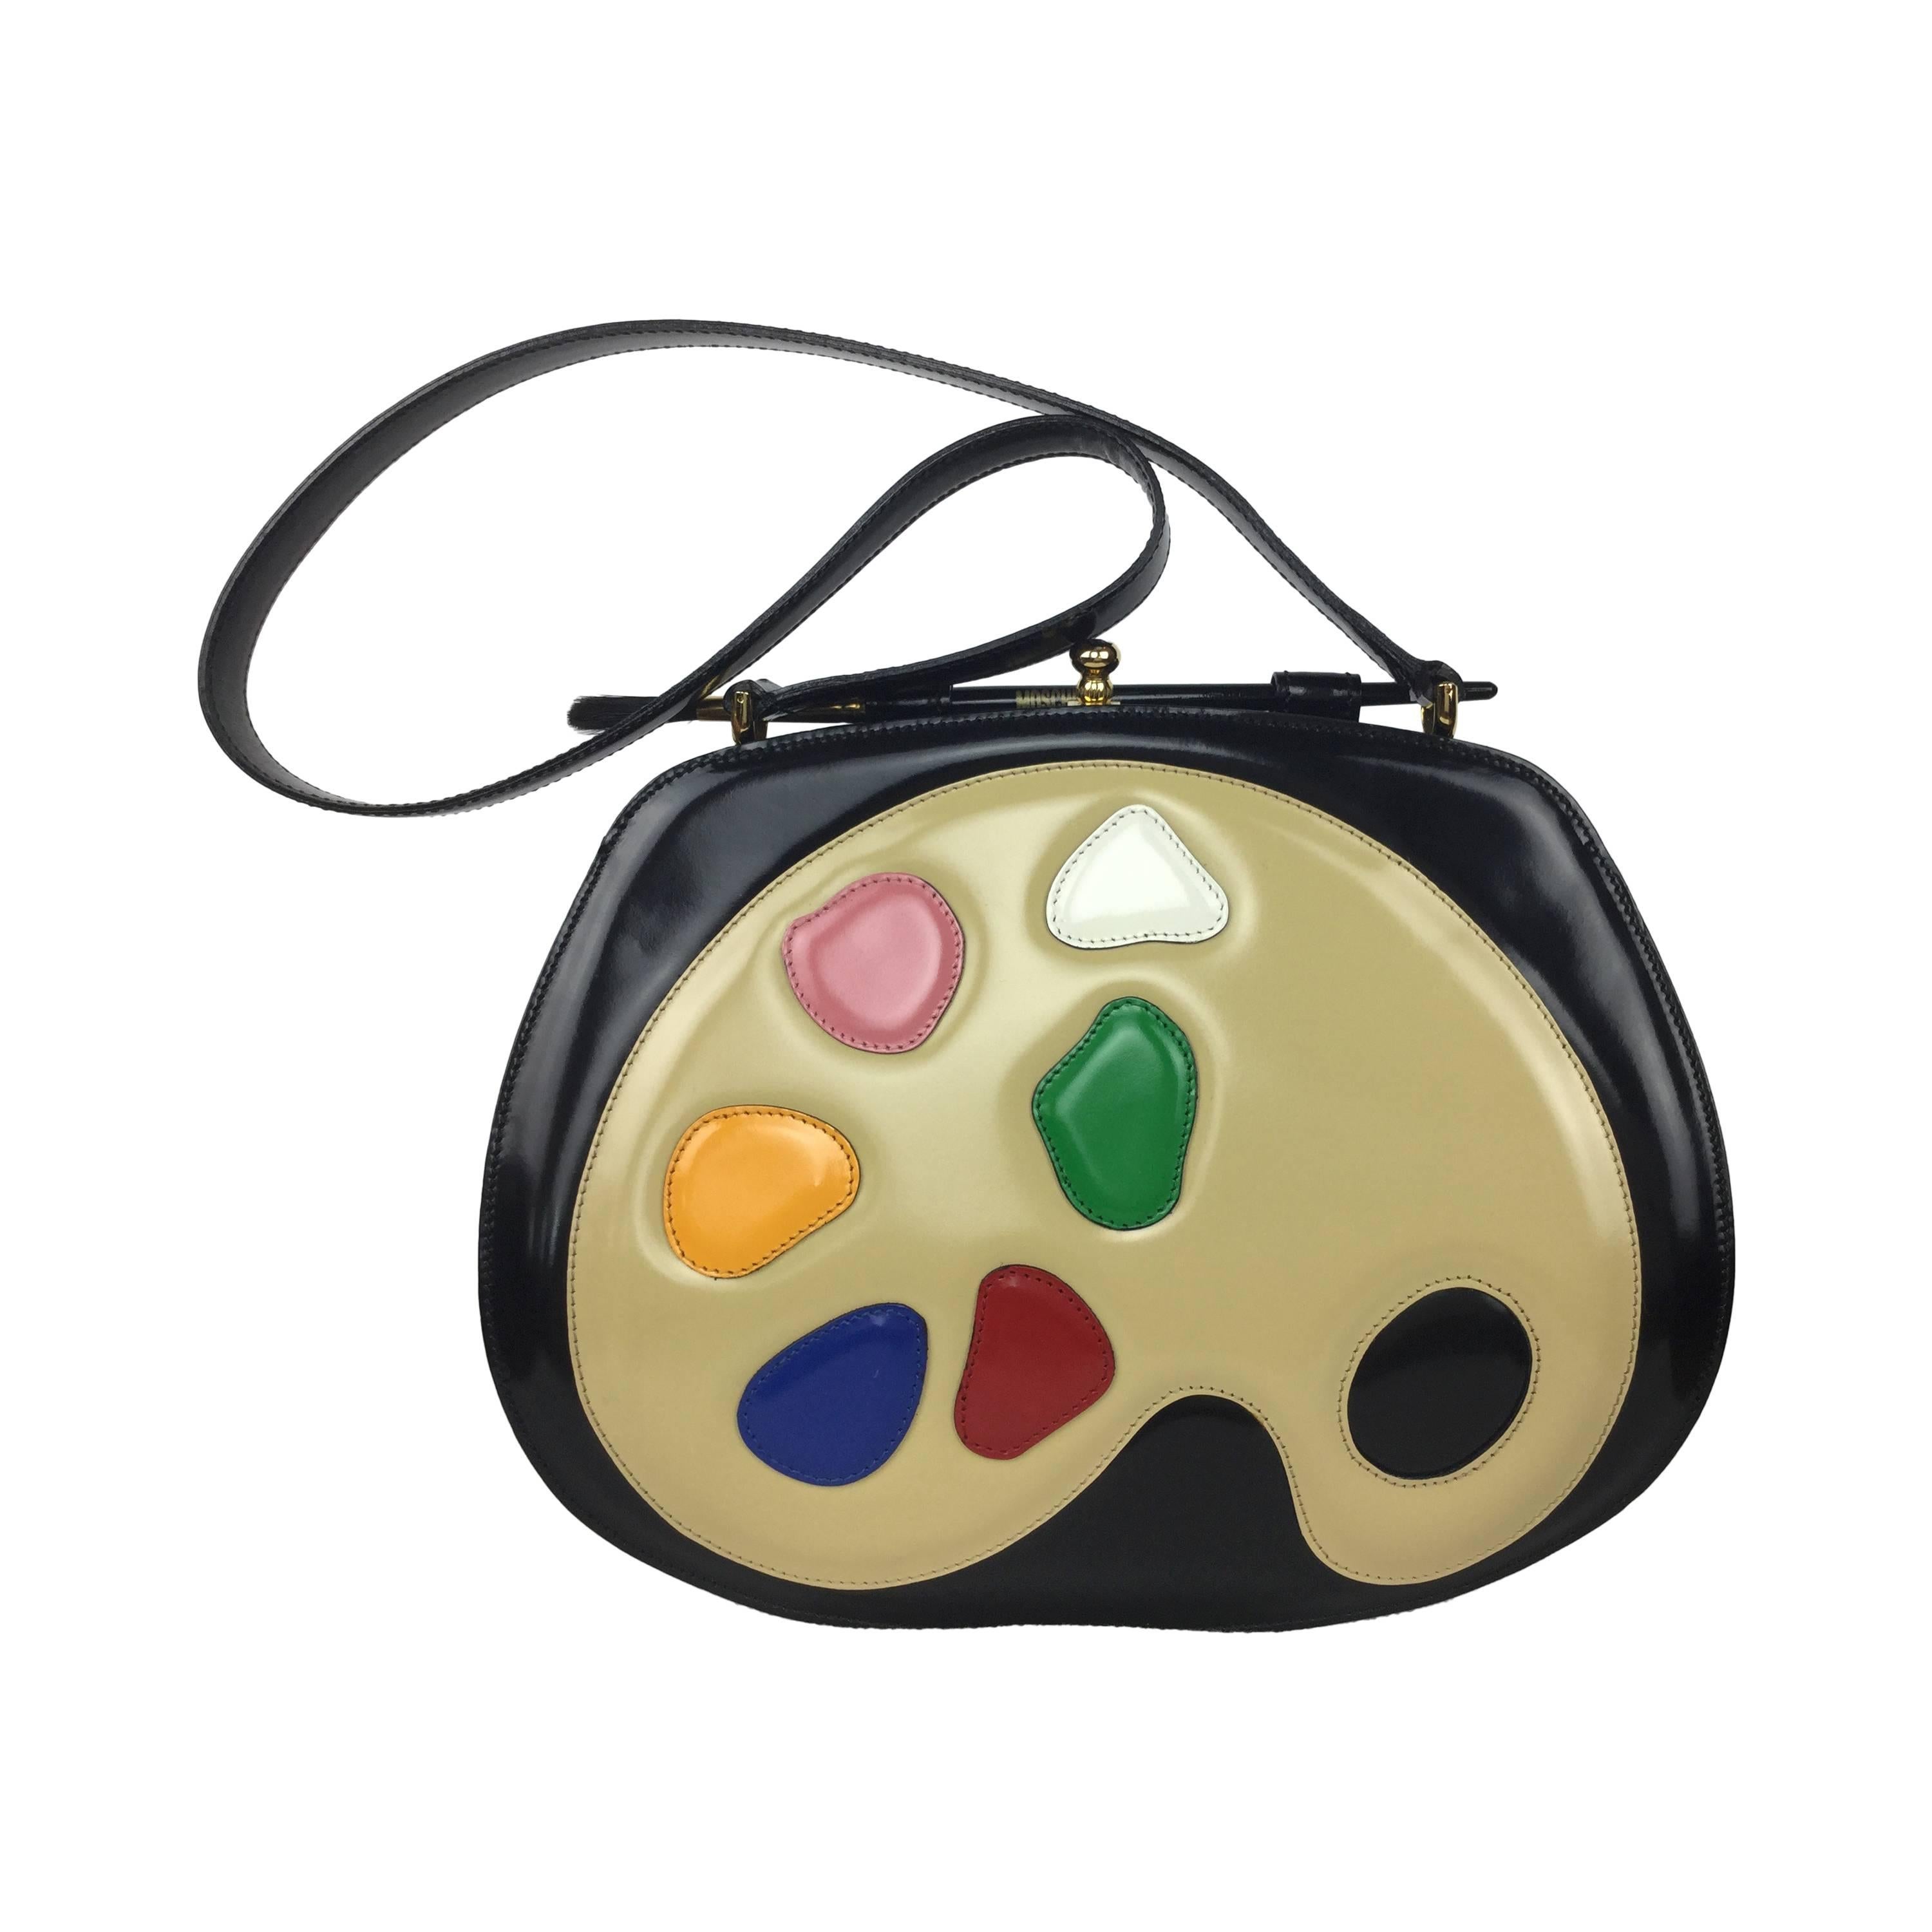 Rare Moschino Artist's Palette Handbag. 1990's.